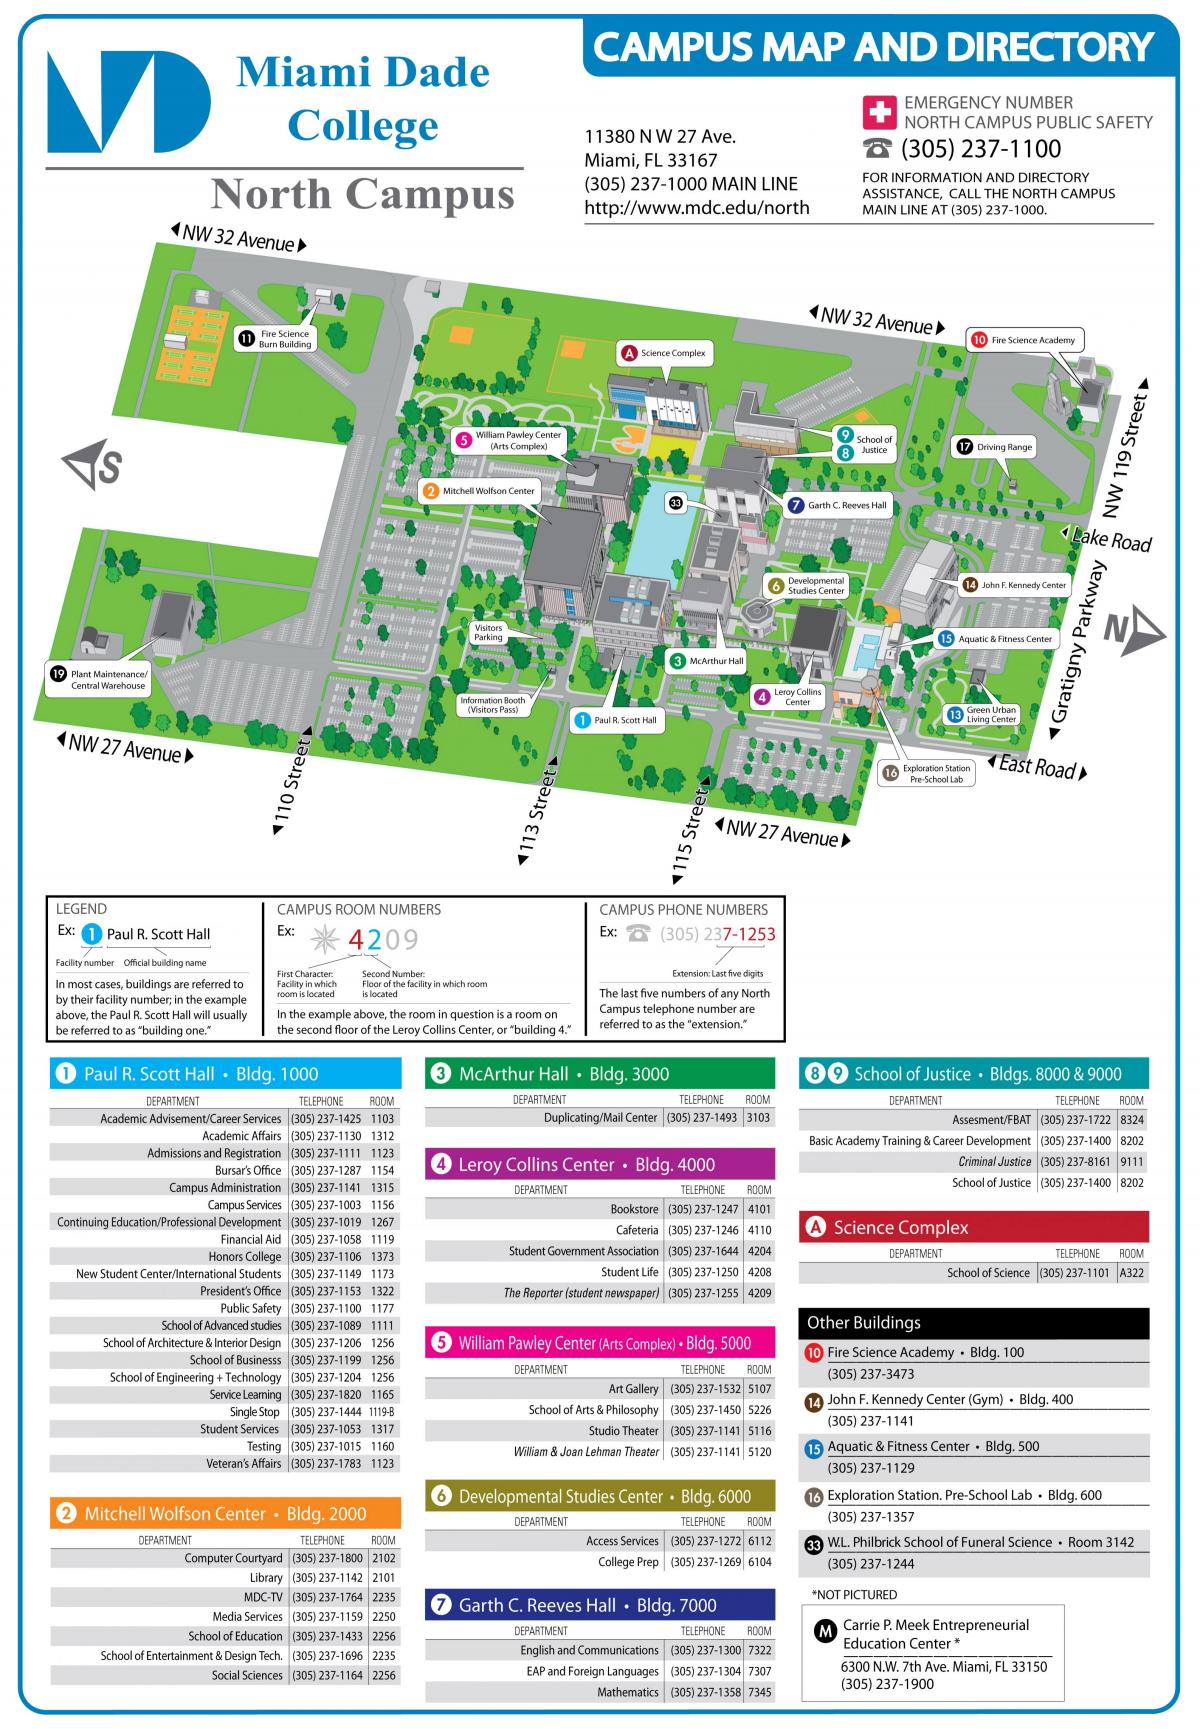 Miami Dade college Północno-Campus mapę